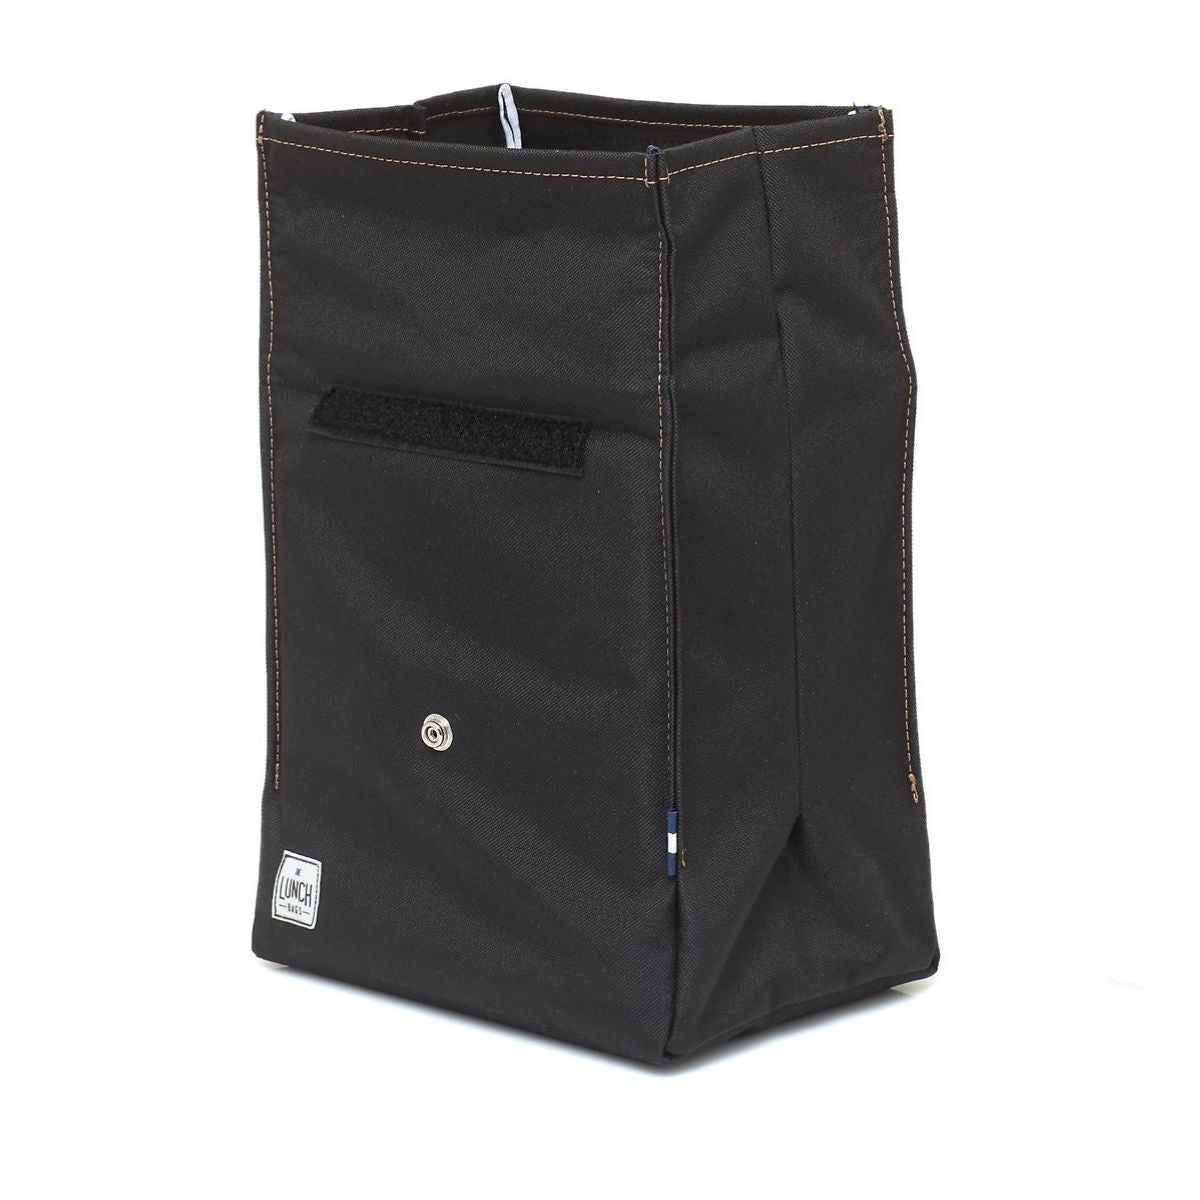 The Lunch Bags Original Ισοθερμική Τσάντα Black wt Brown Strap - 5lt